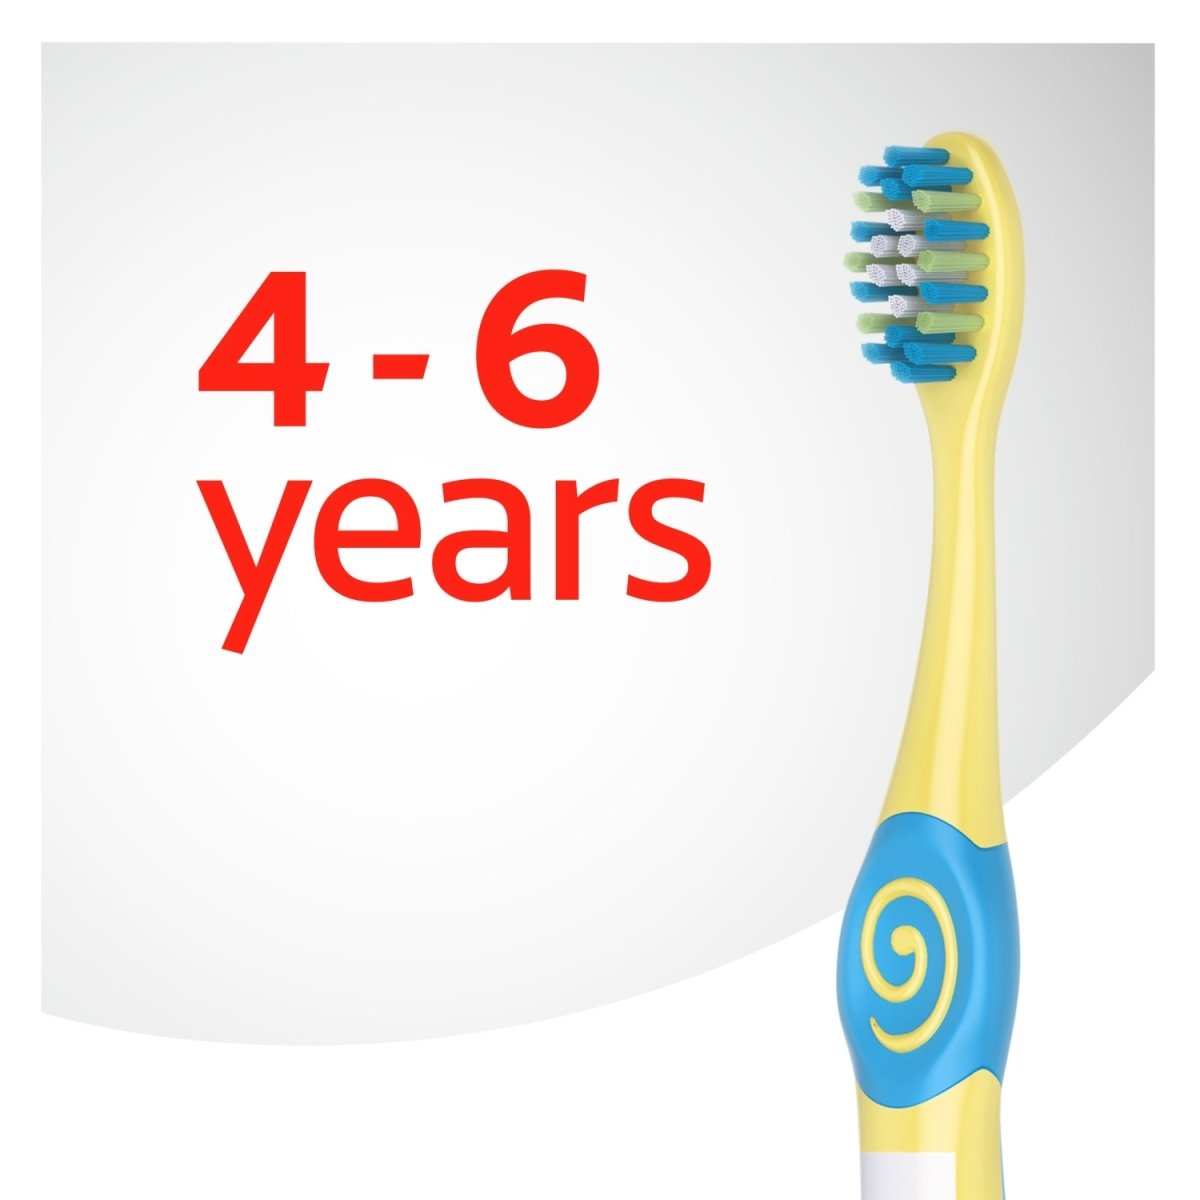 Colgate Toothbrush Smiles 4-6 Years - Intamarque 8714789086477